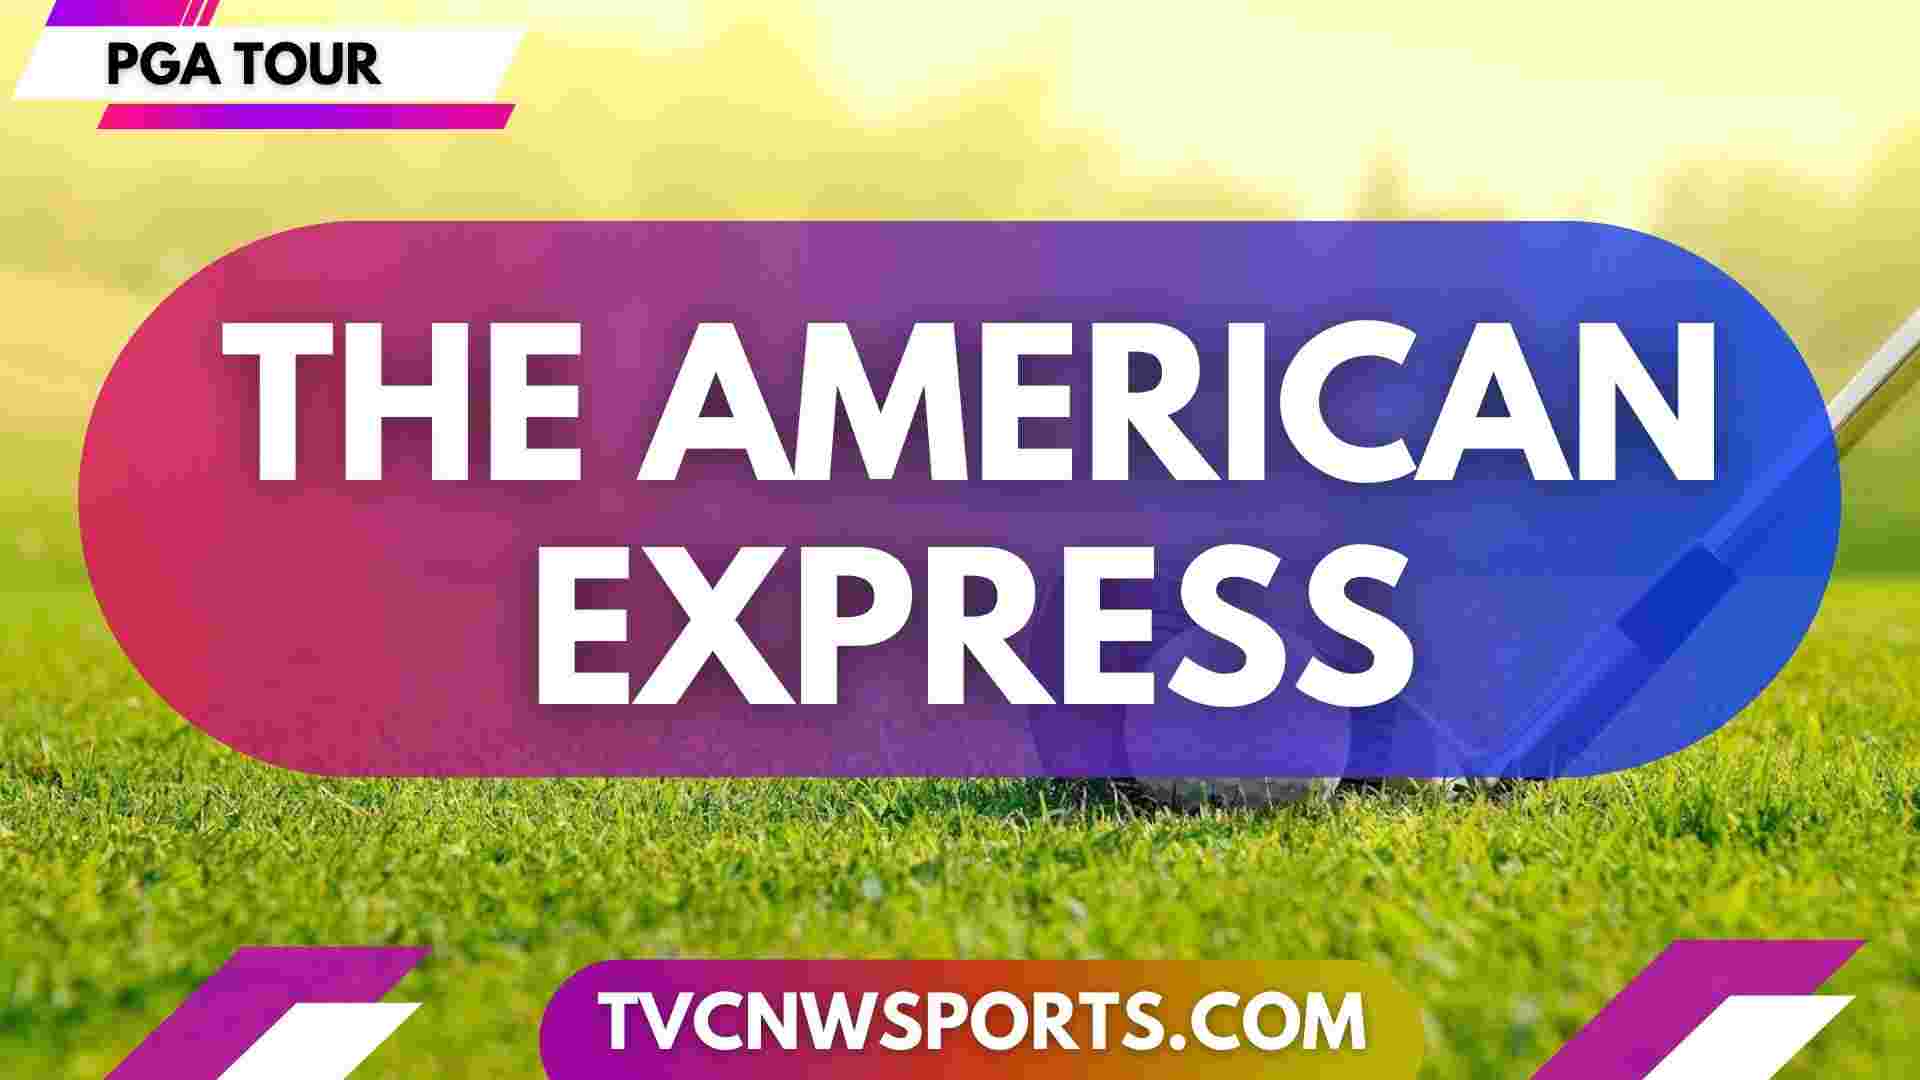 The American Express Golf PGA Tour